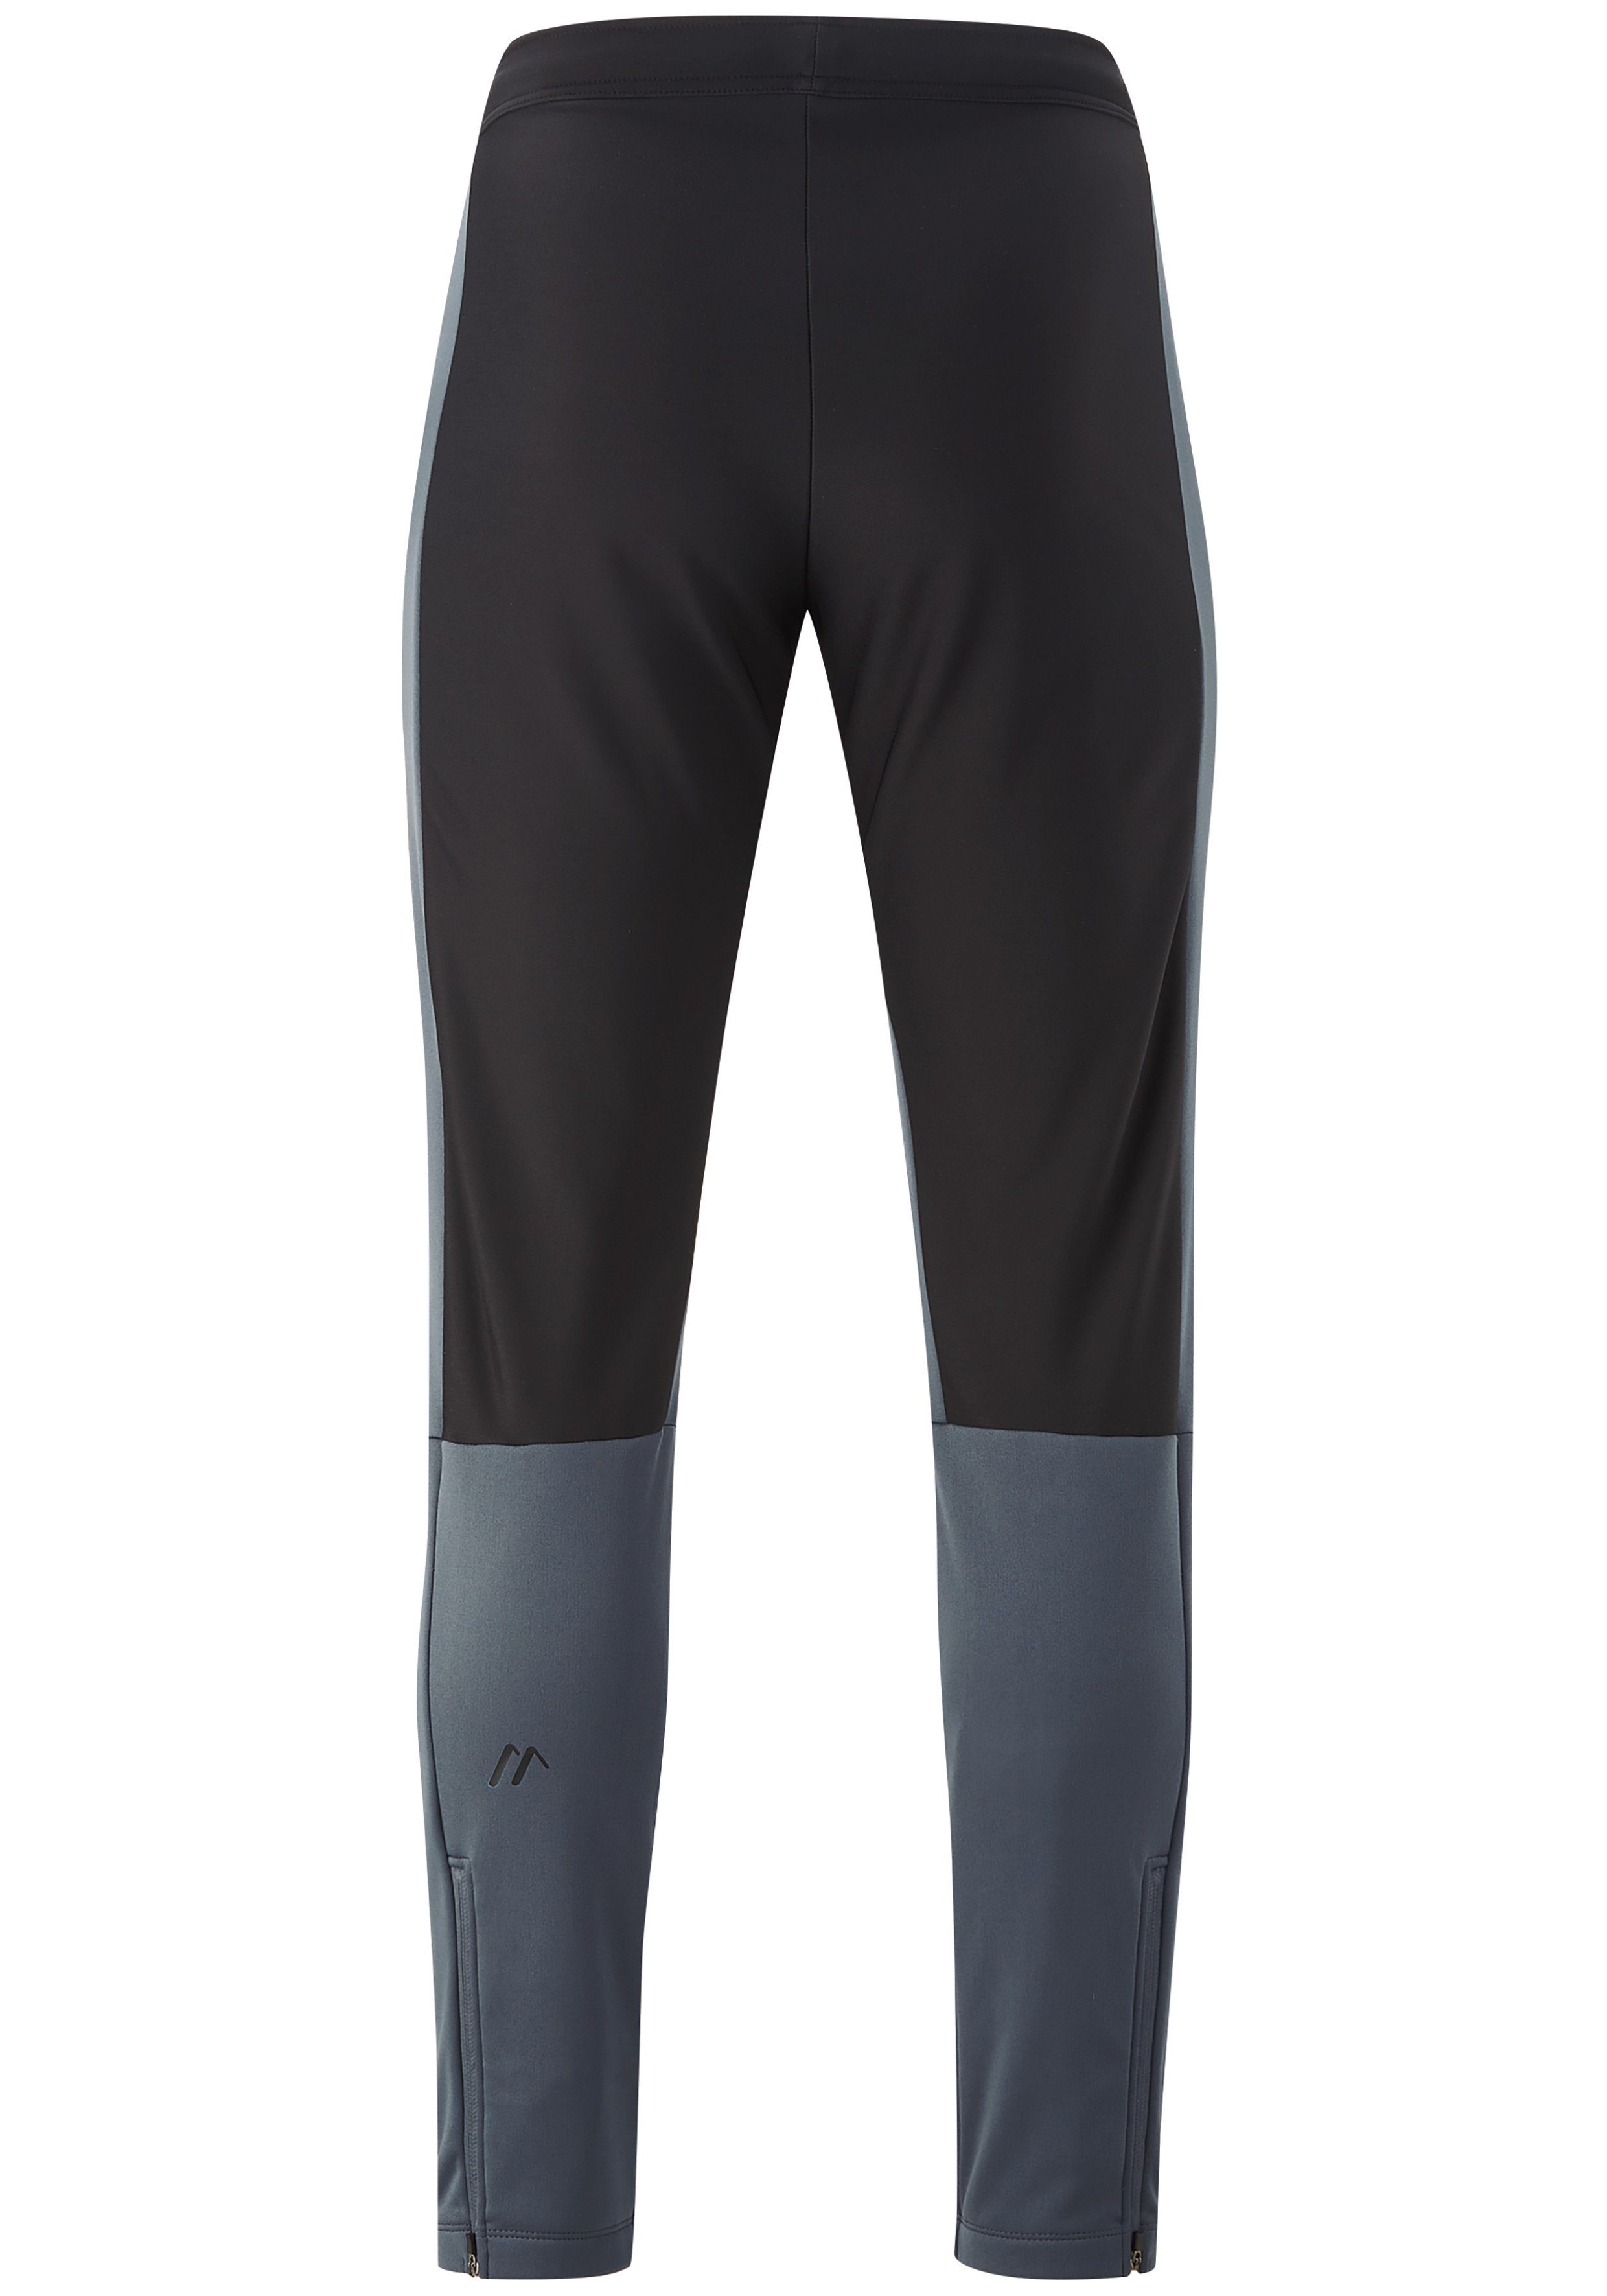 Maier Sports Softshellhose Malselv M Pants modernen graublau komfortable Softshell-Hose Slim-Fit Schnitt in